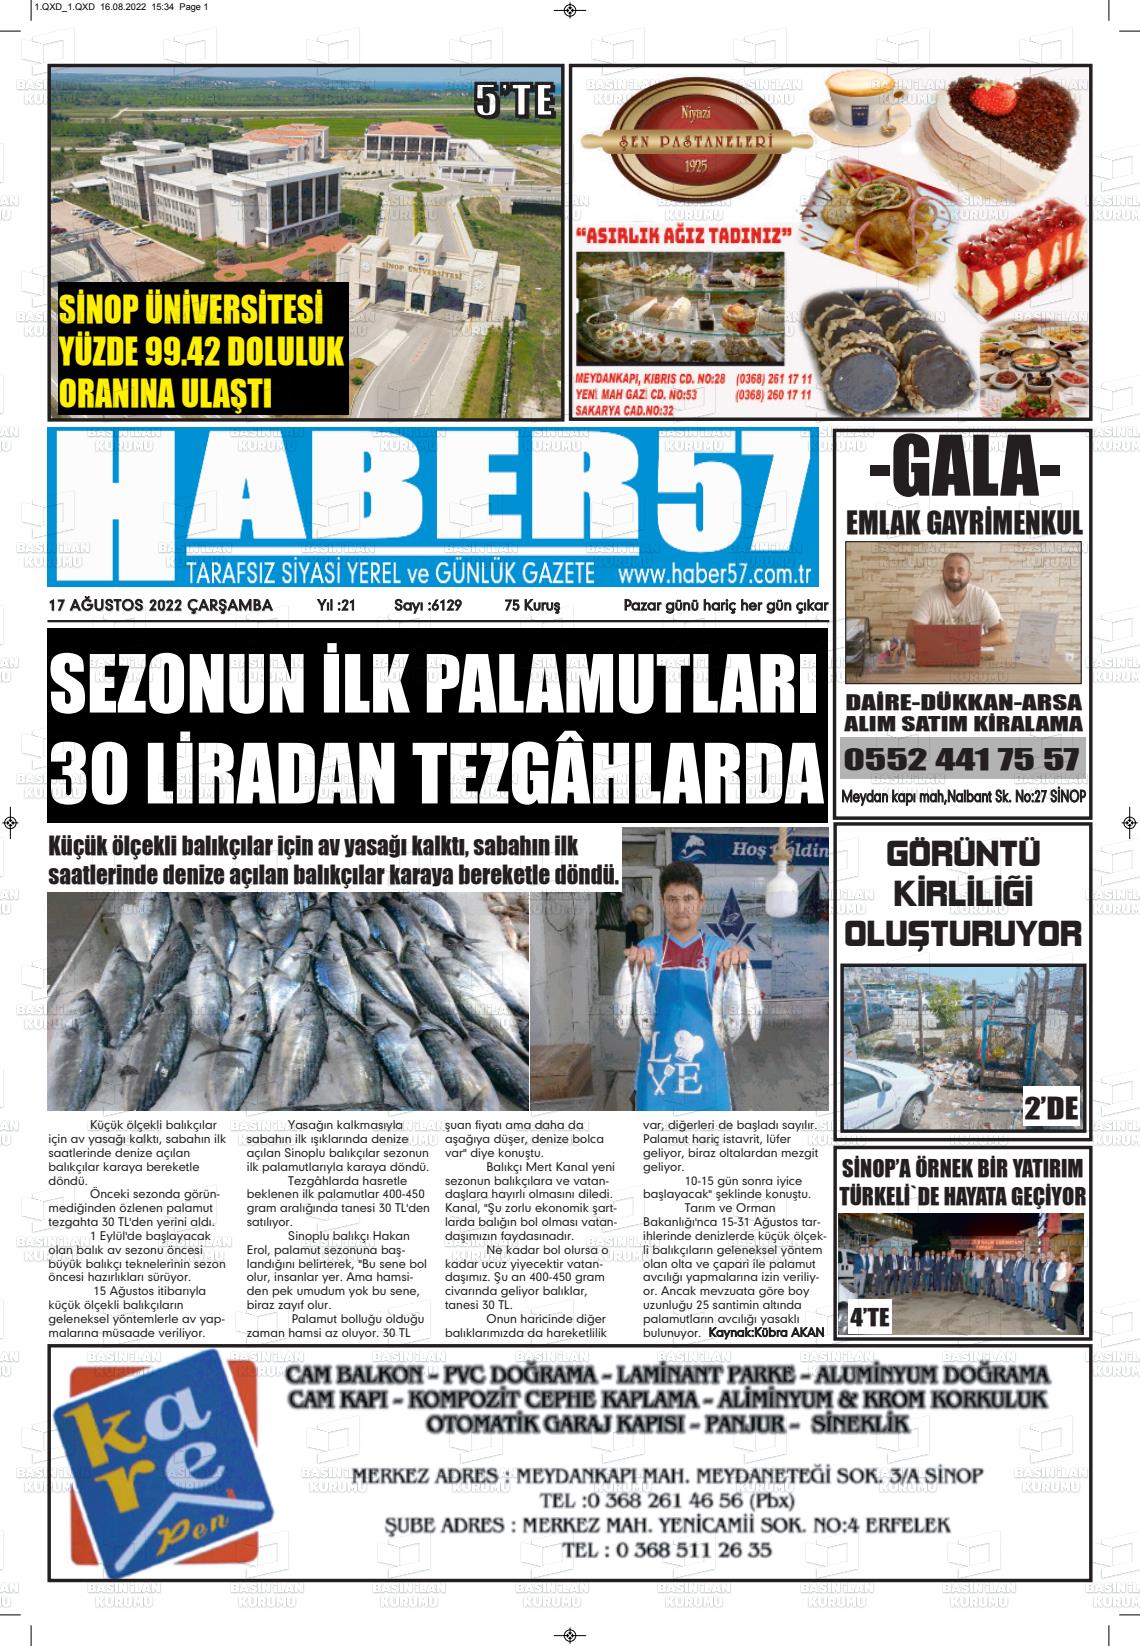 17 Ağustos 2022 Haber 57 Gazete Manşeti